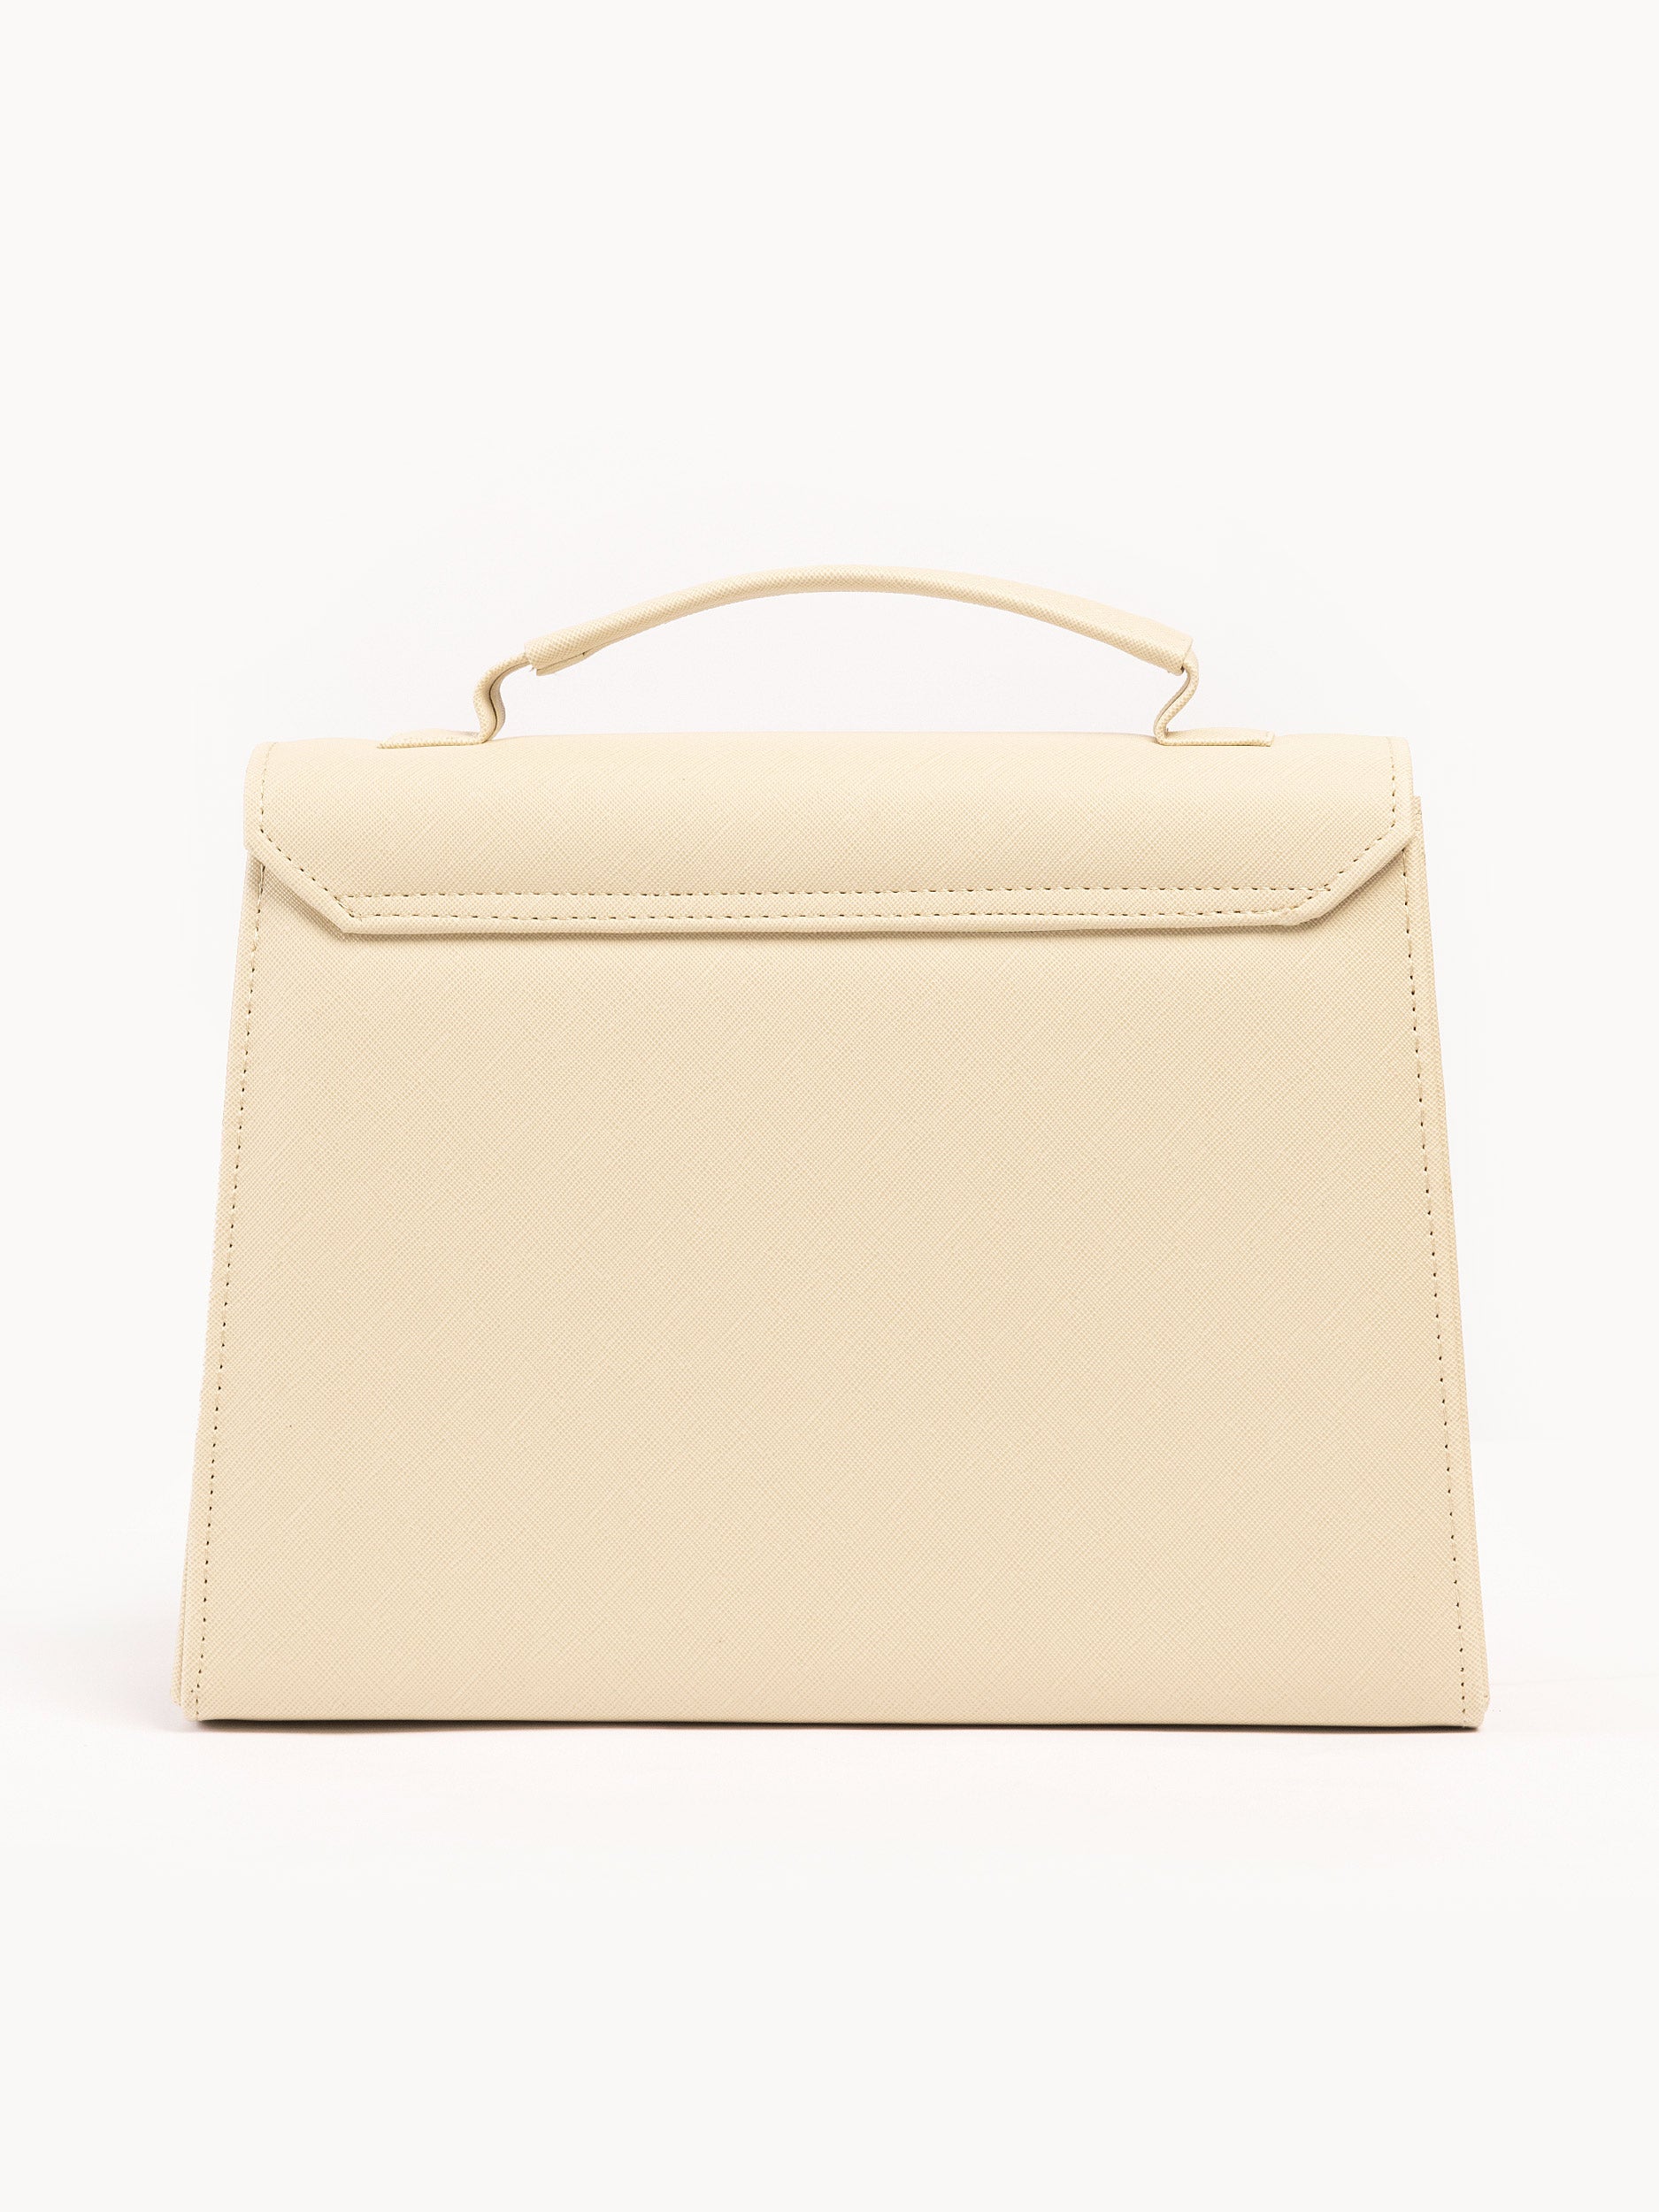 honeycomb-box-style-handbag